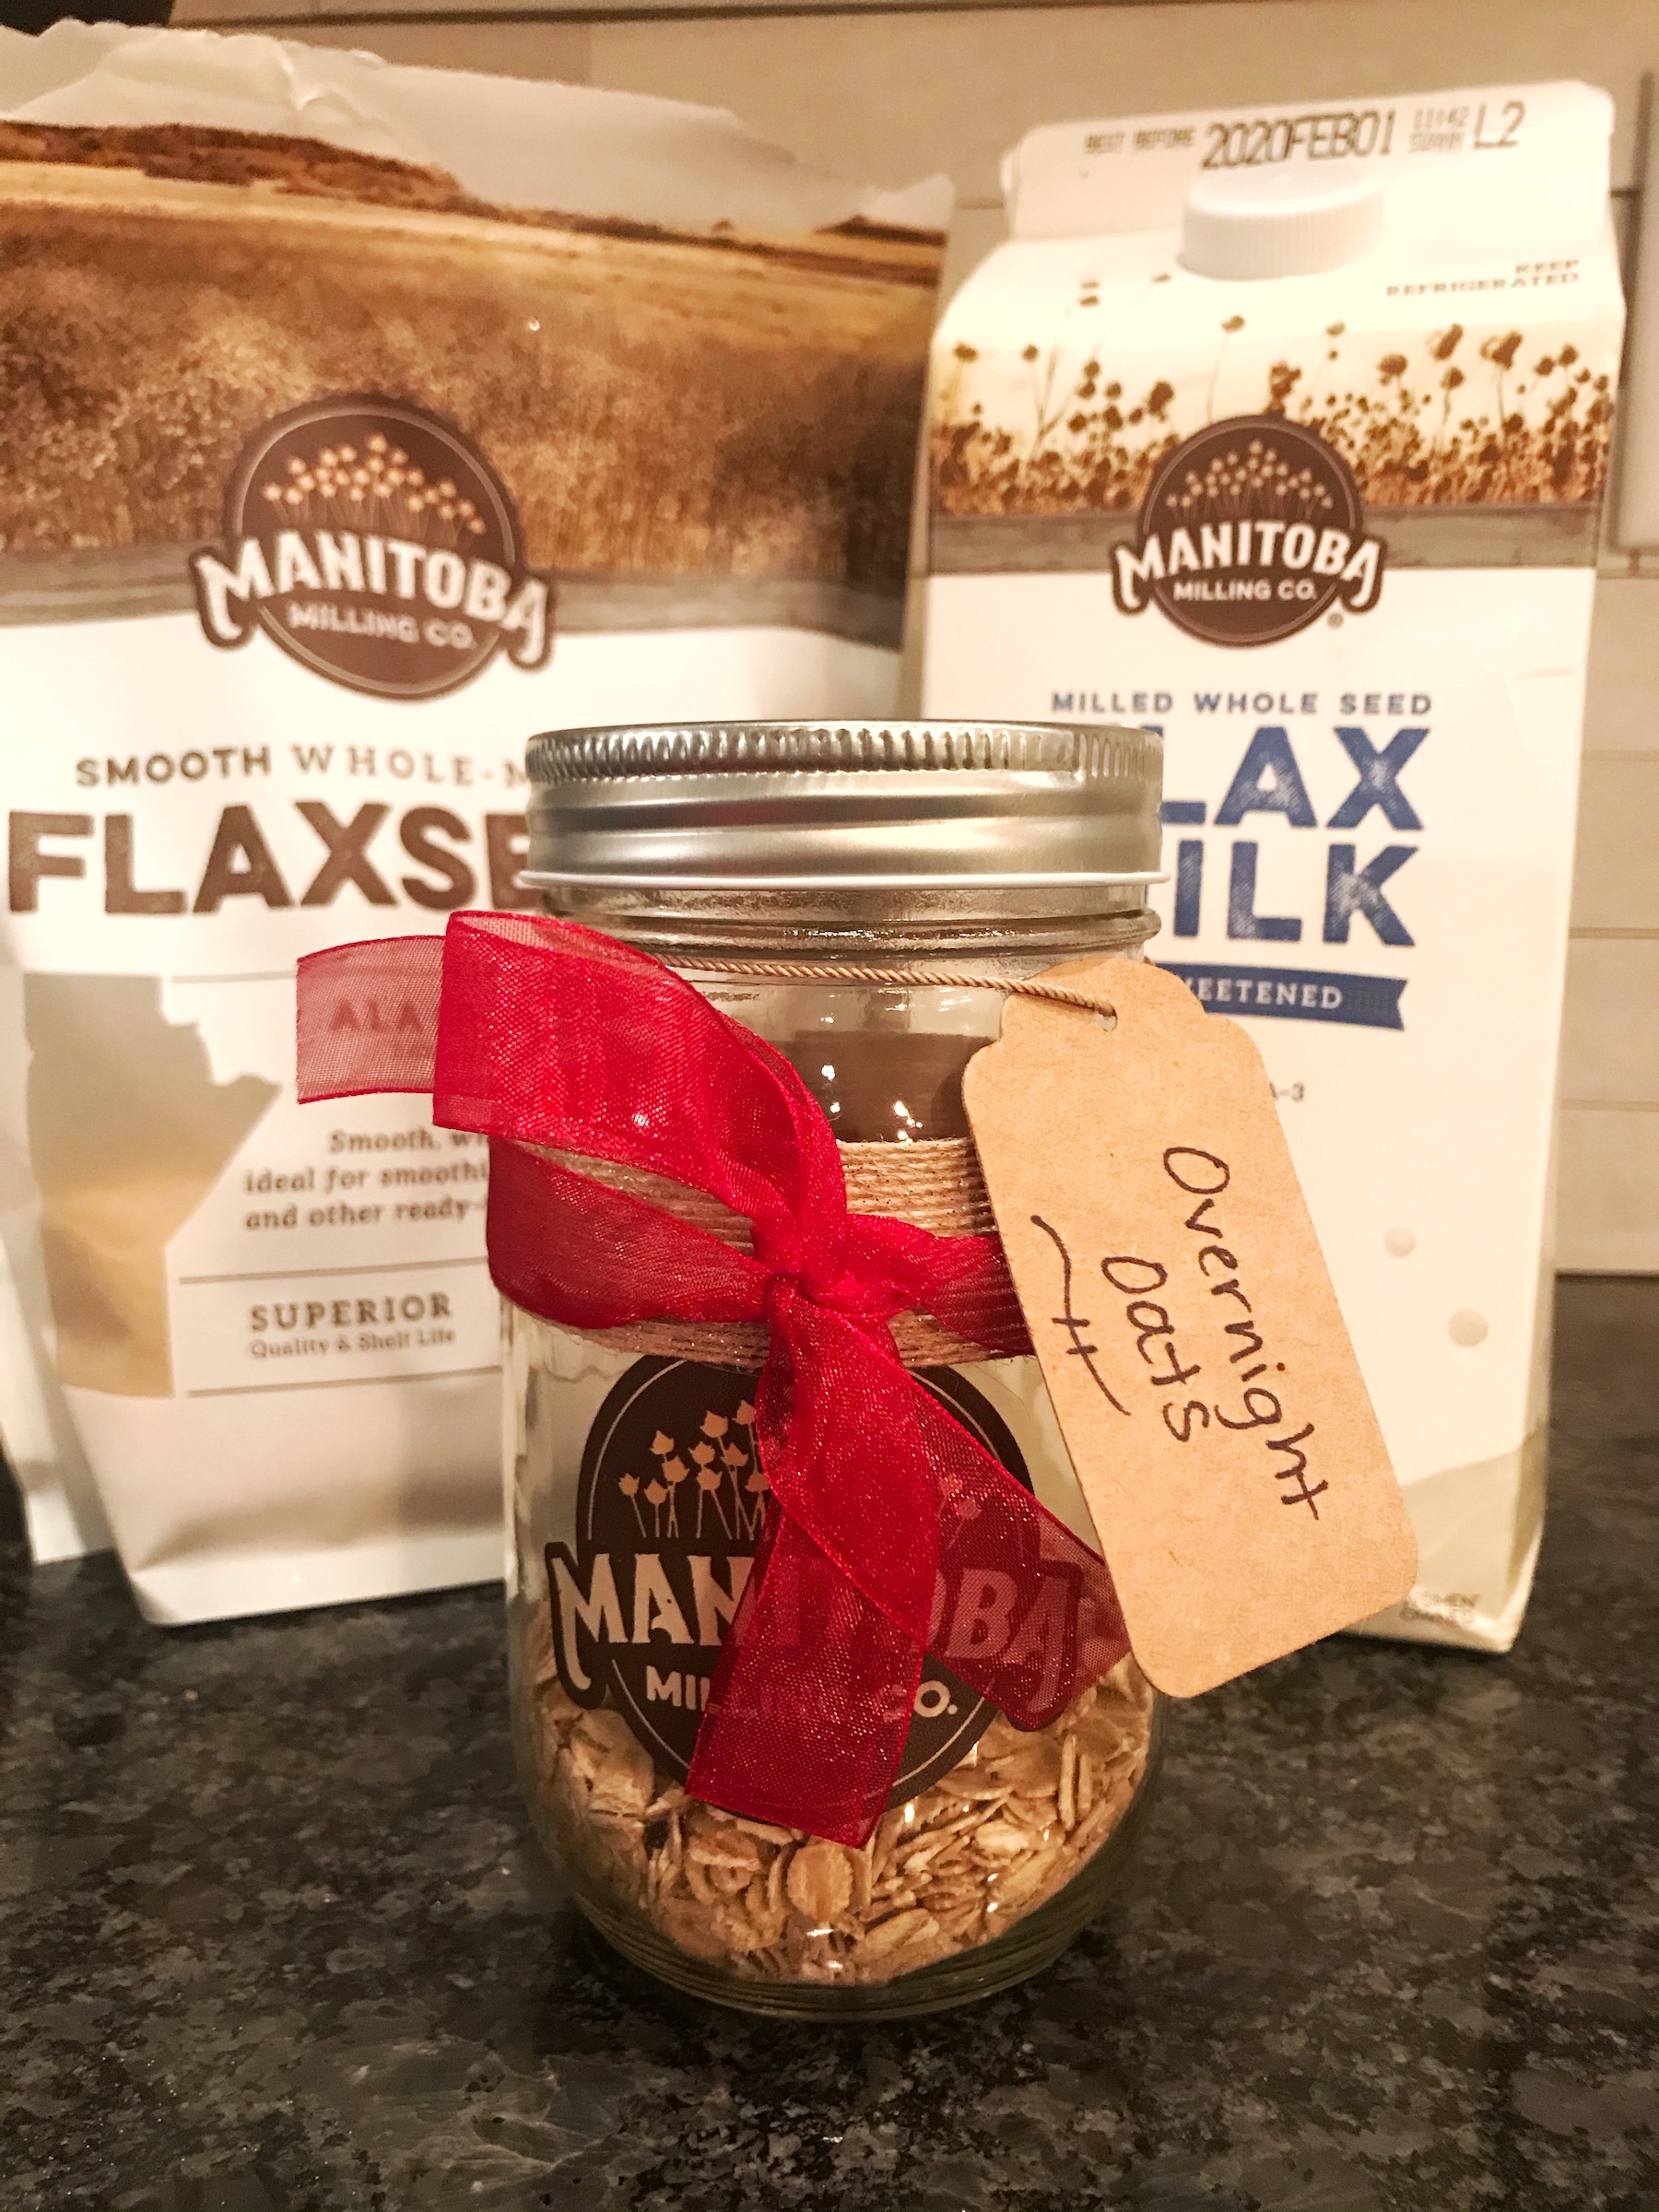 mason-jar-overnight-oats-holiday-gifts-manitoba-flax-seed-milling-company